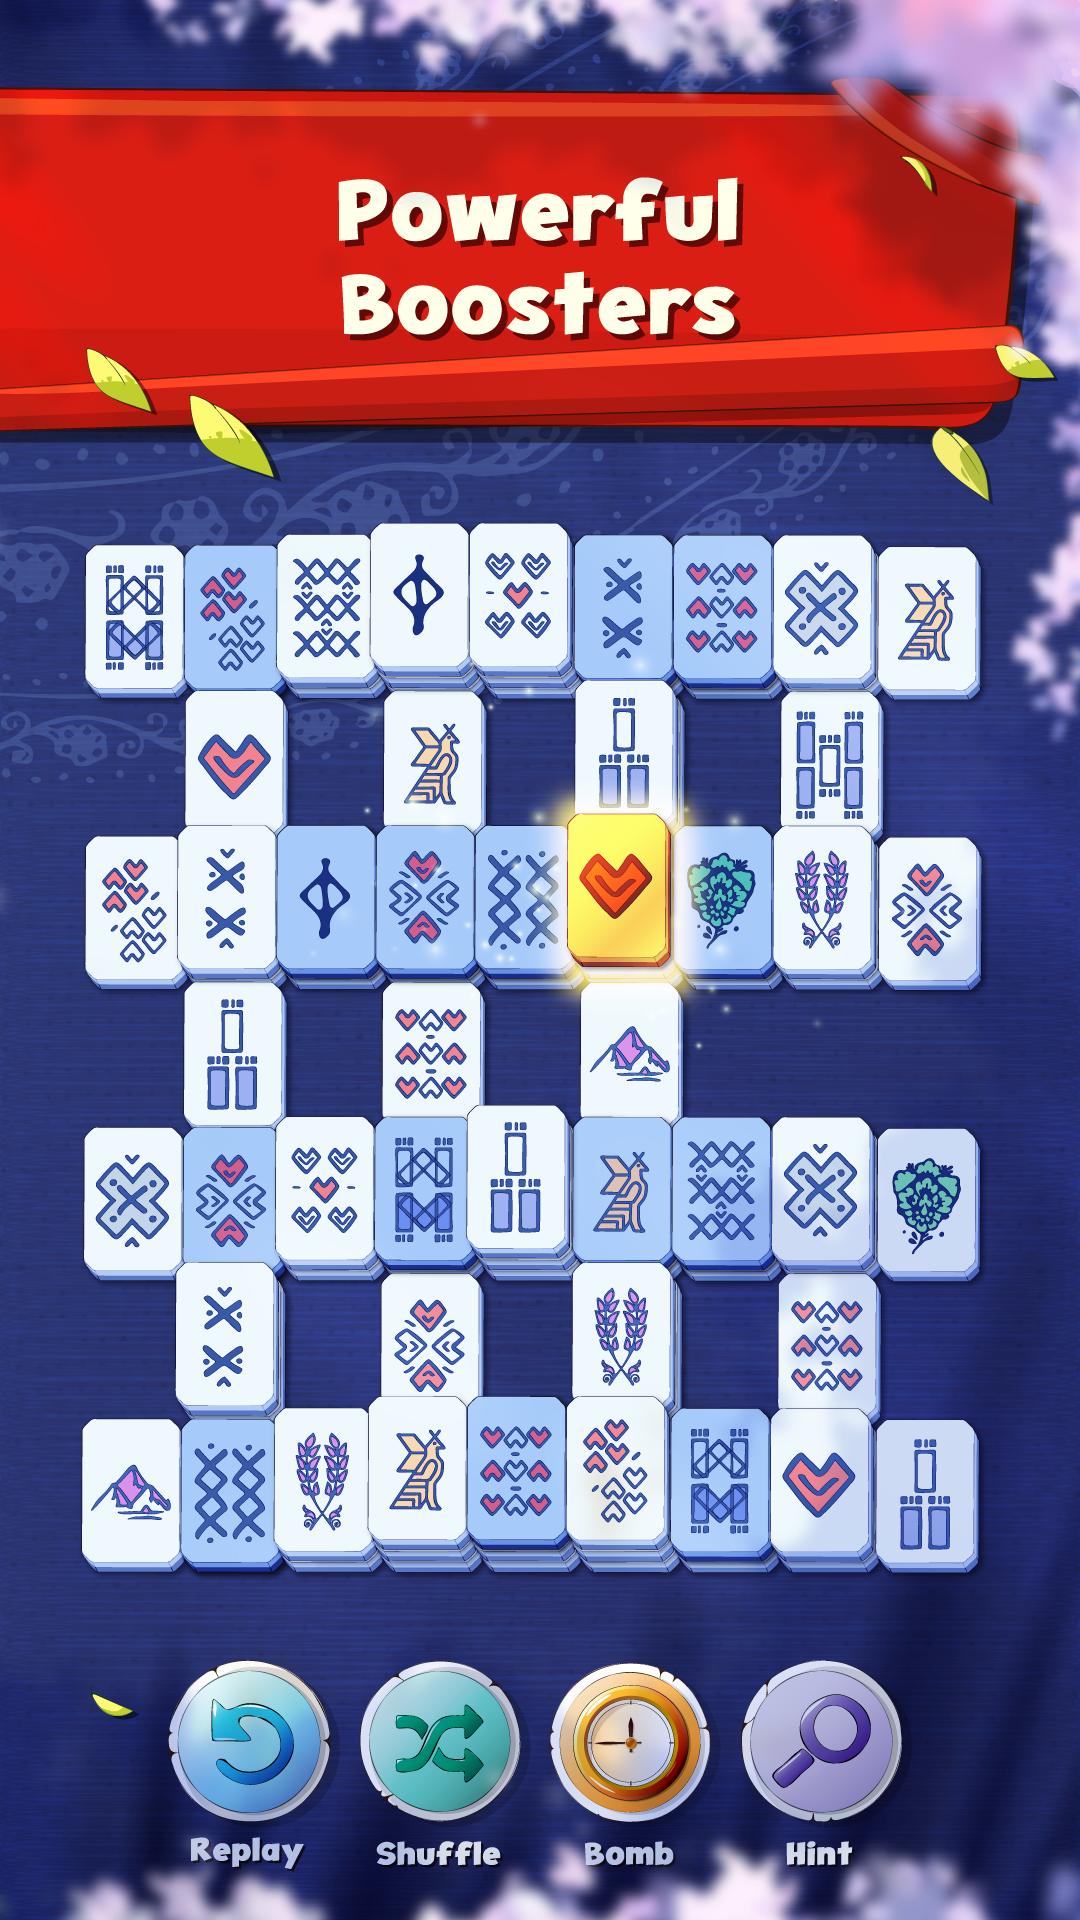 Mahjong Solitaire Free: cartas solitario mahjong for Android - APK Download